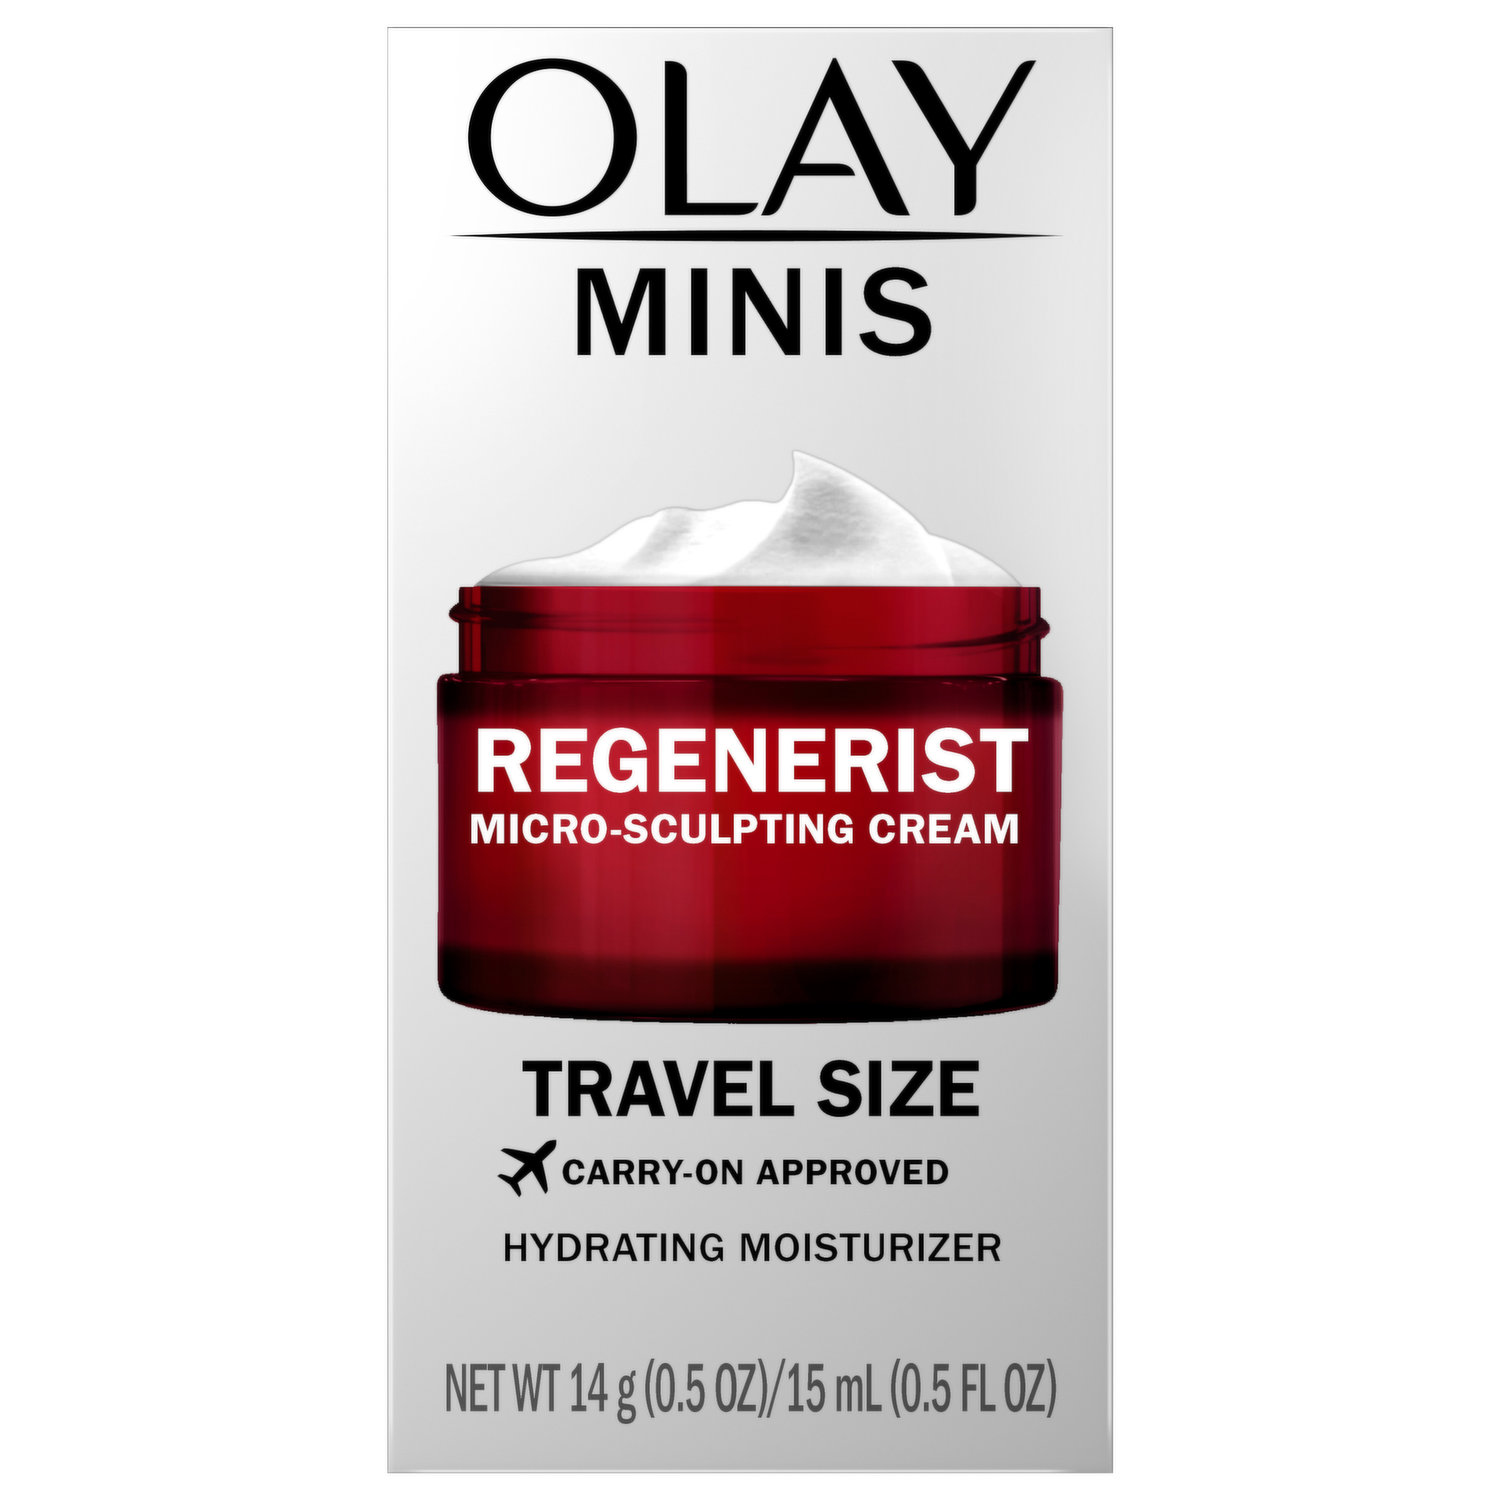 Olay Regenerist Micro-Sculpting Cream Face Moisturizer, 1.7 oz 